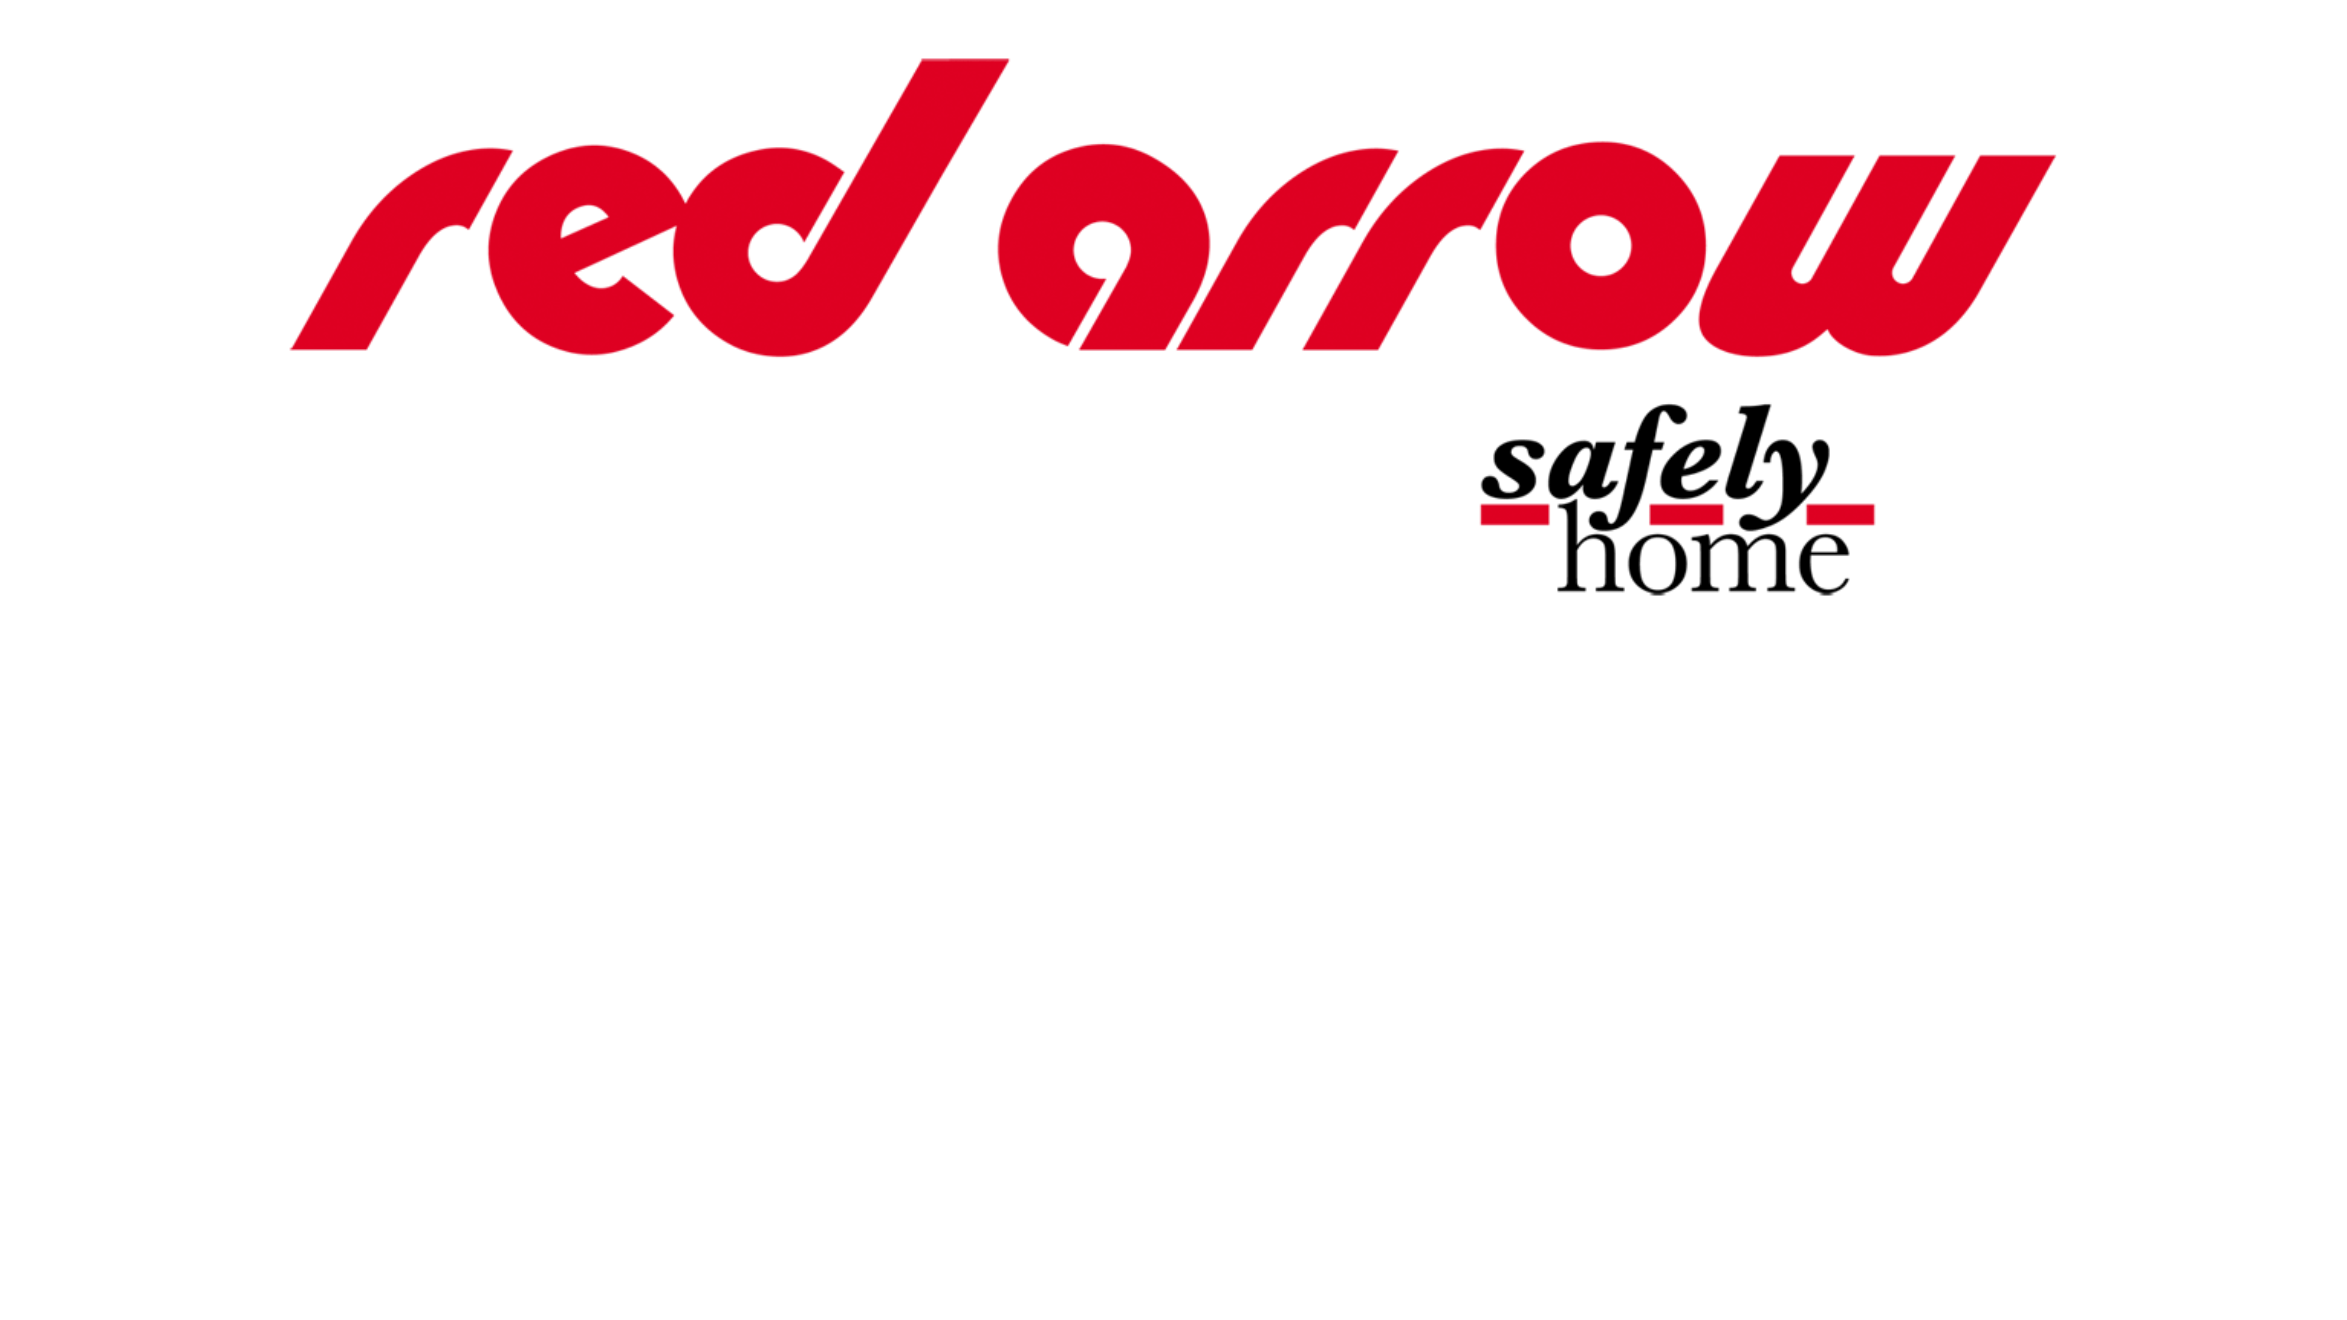 Red Arrow logo